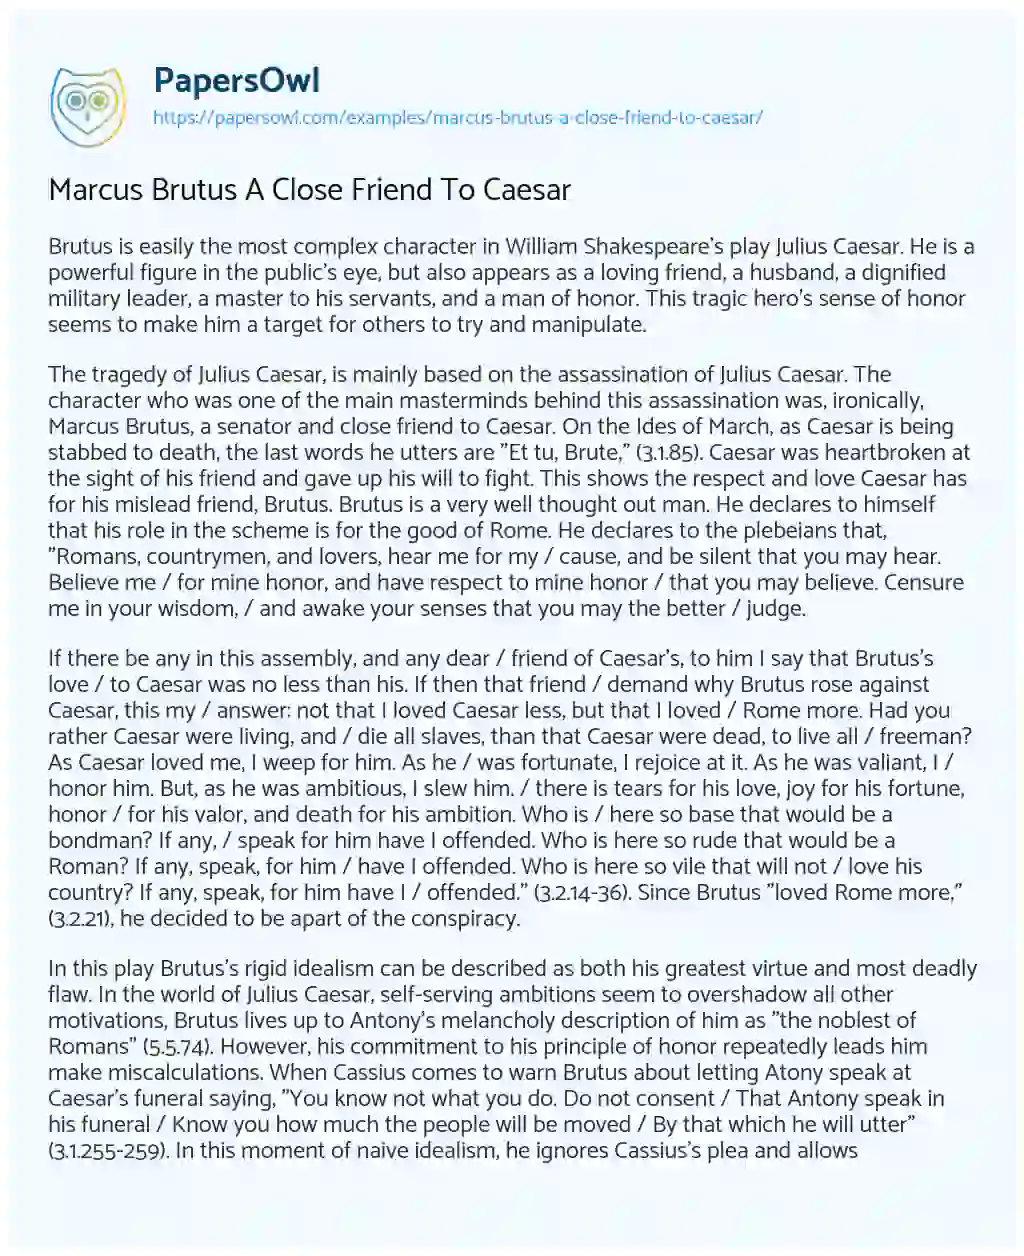 Essay on Marcus Brutus a Close Friend to Caesar